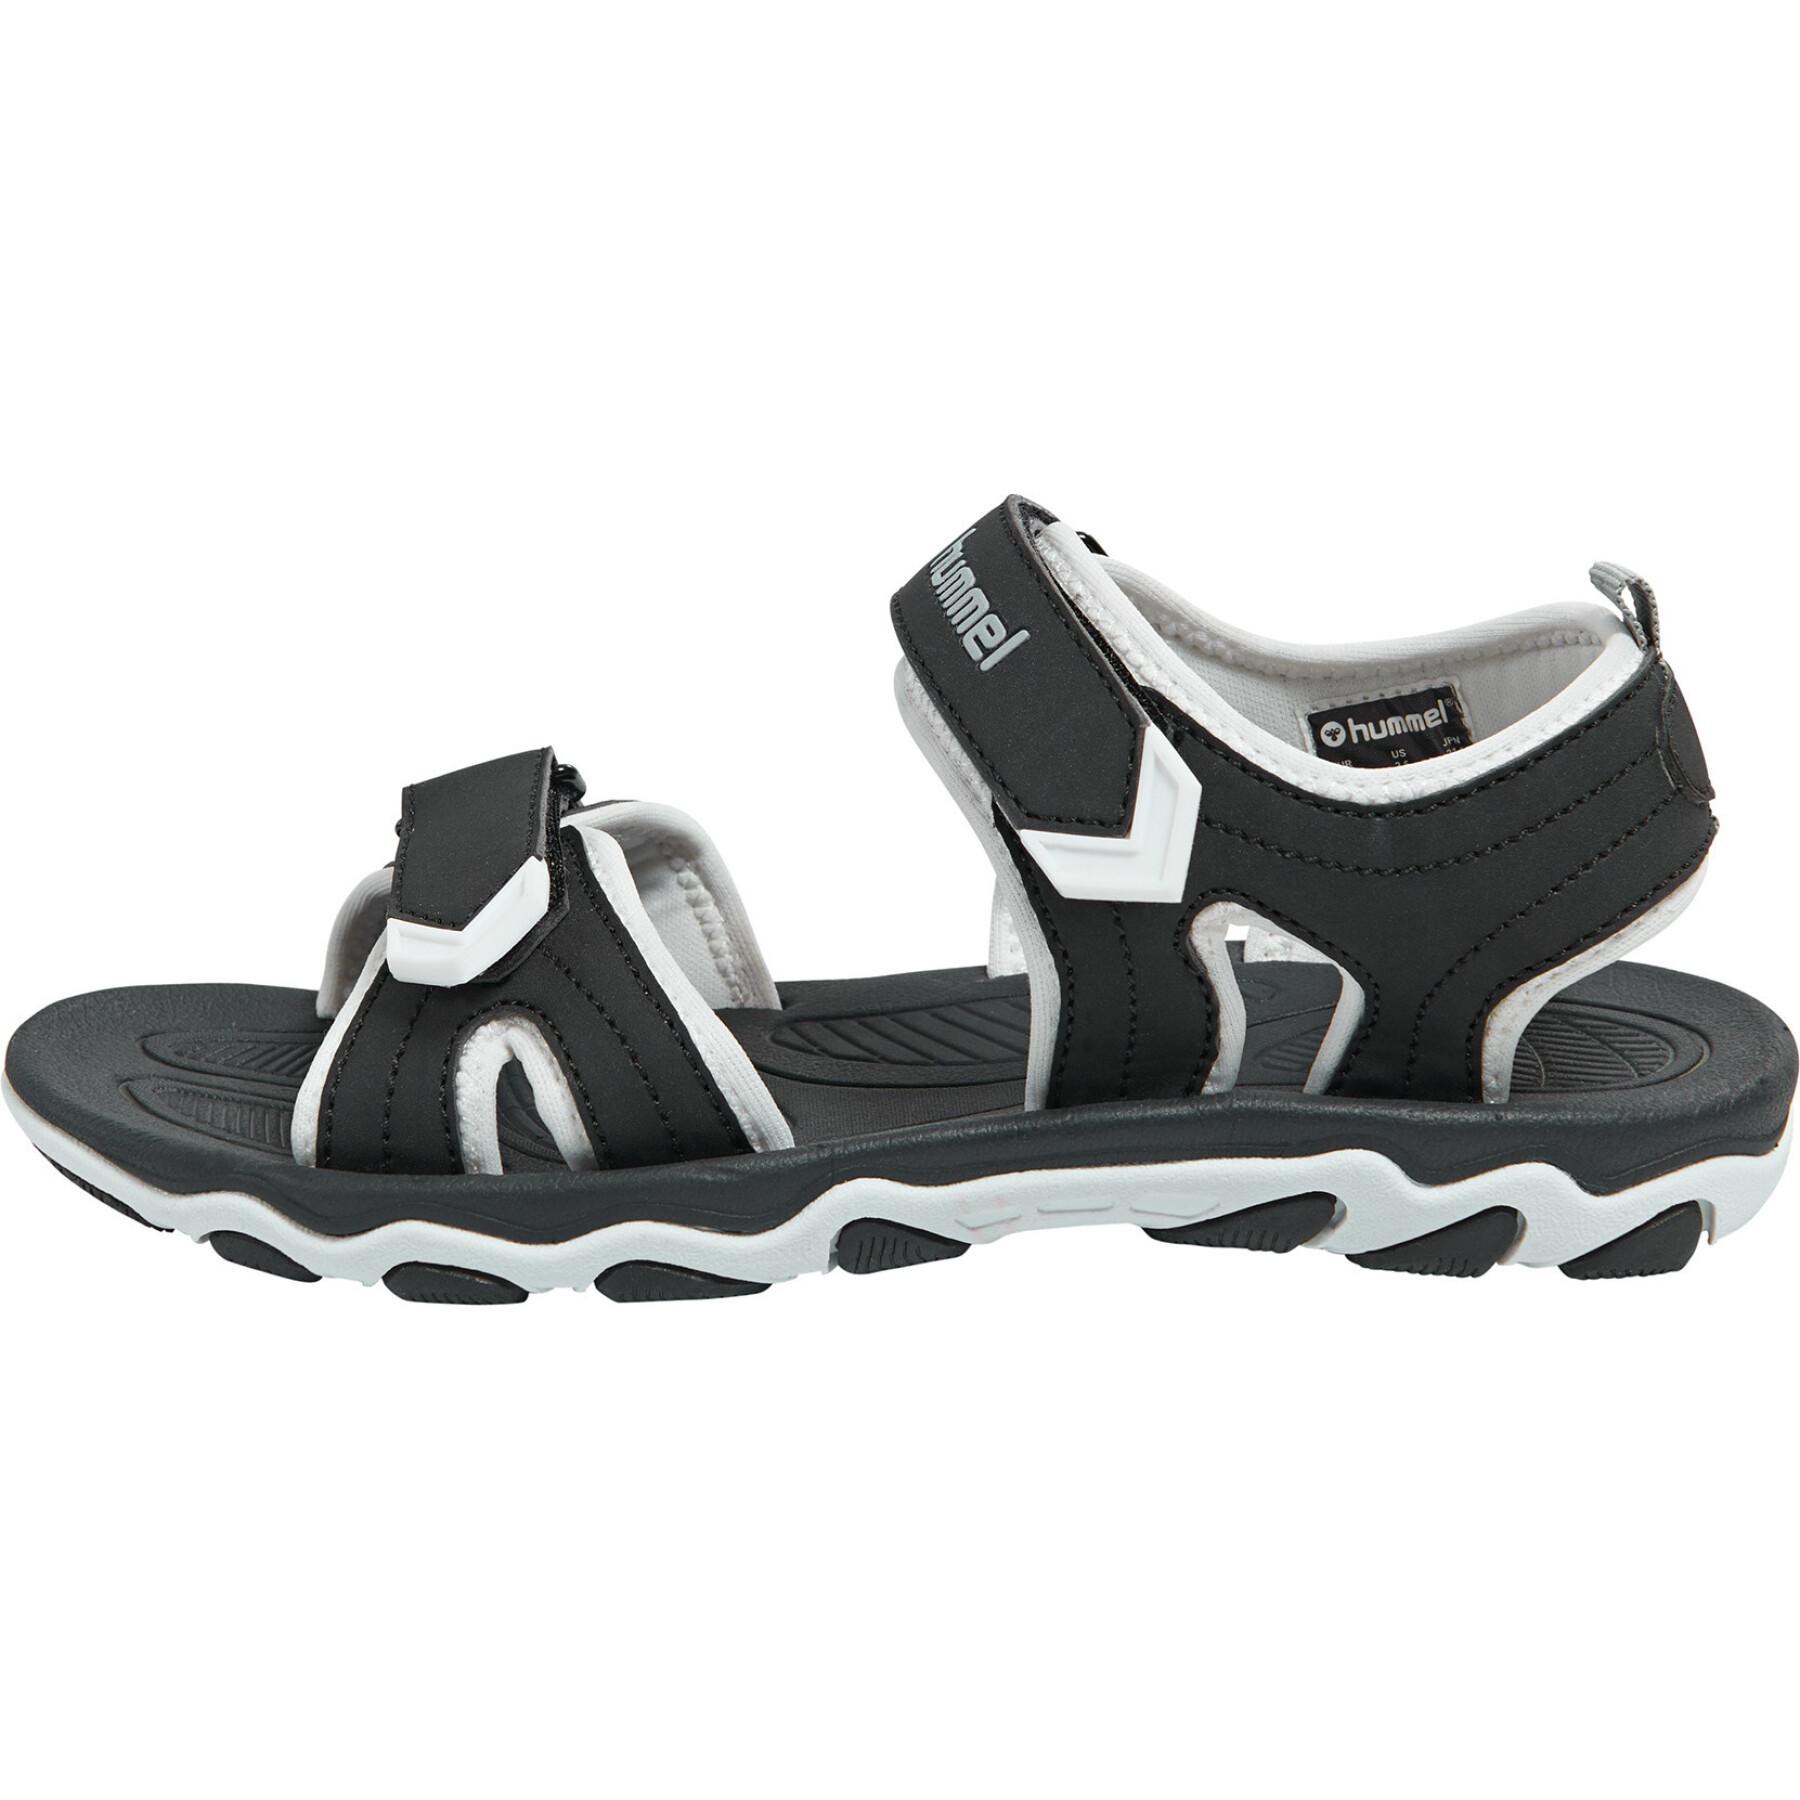 flip-flops Hummel sandal sport - Tap shoes - Shoes To